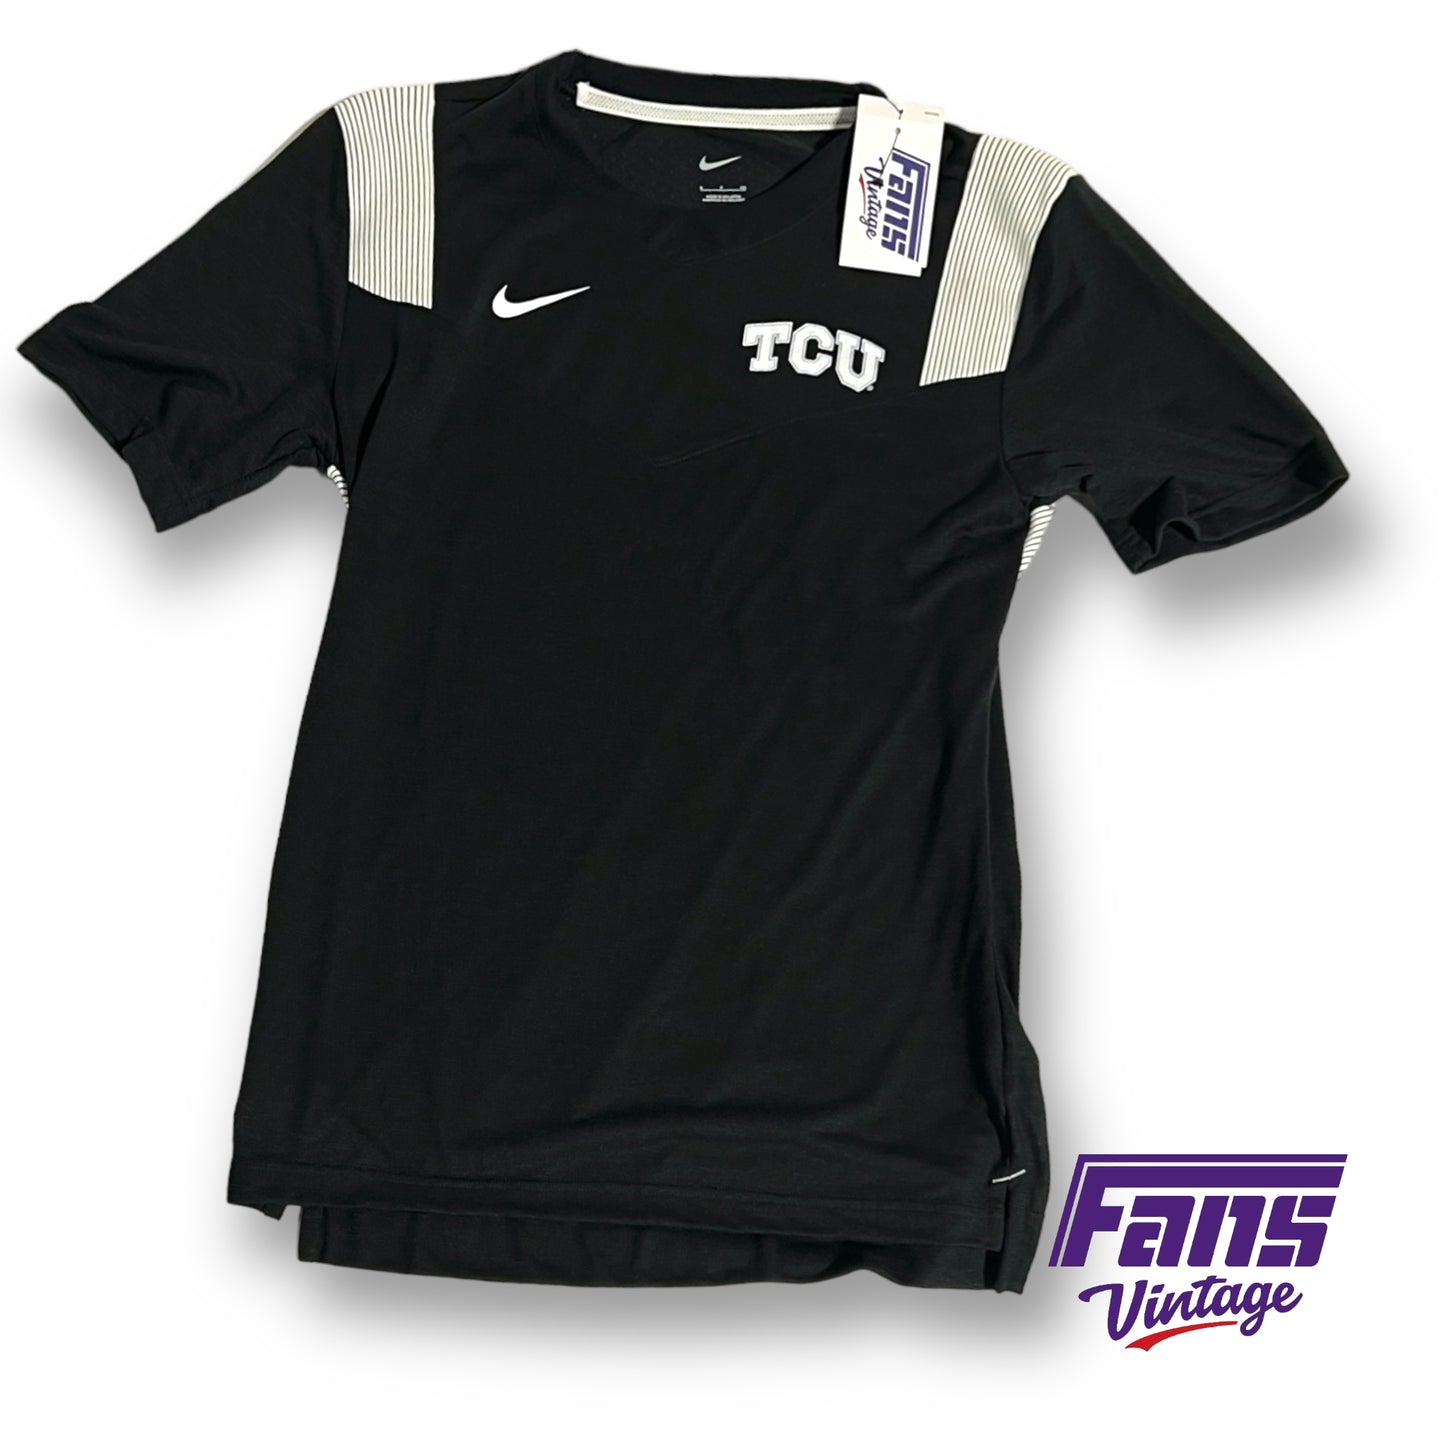 Nike TCU team issued dri-fit tee - Rare